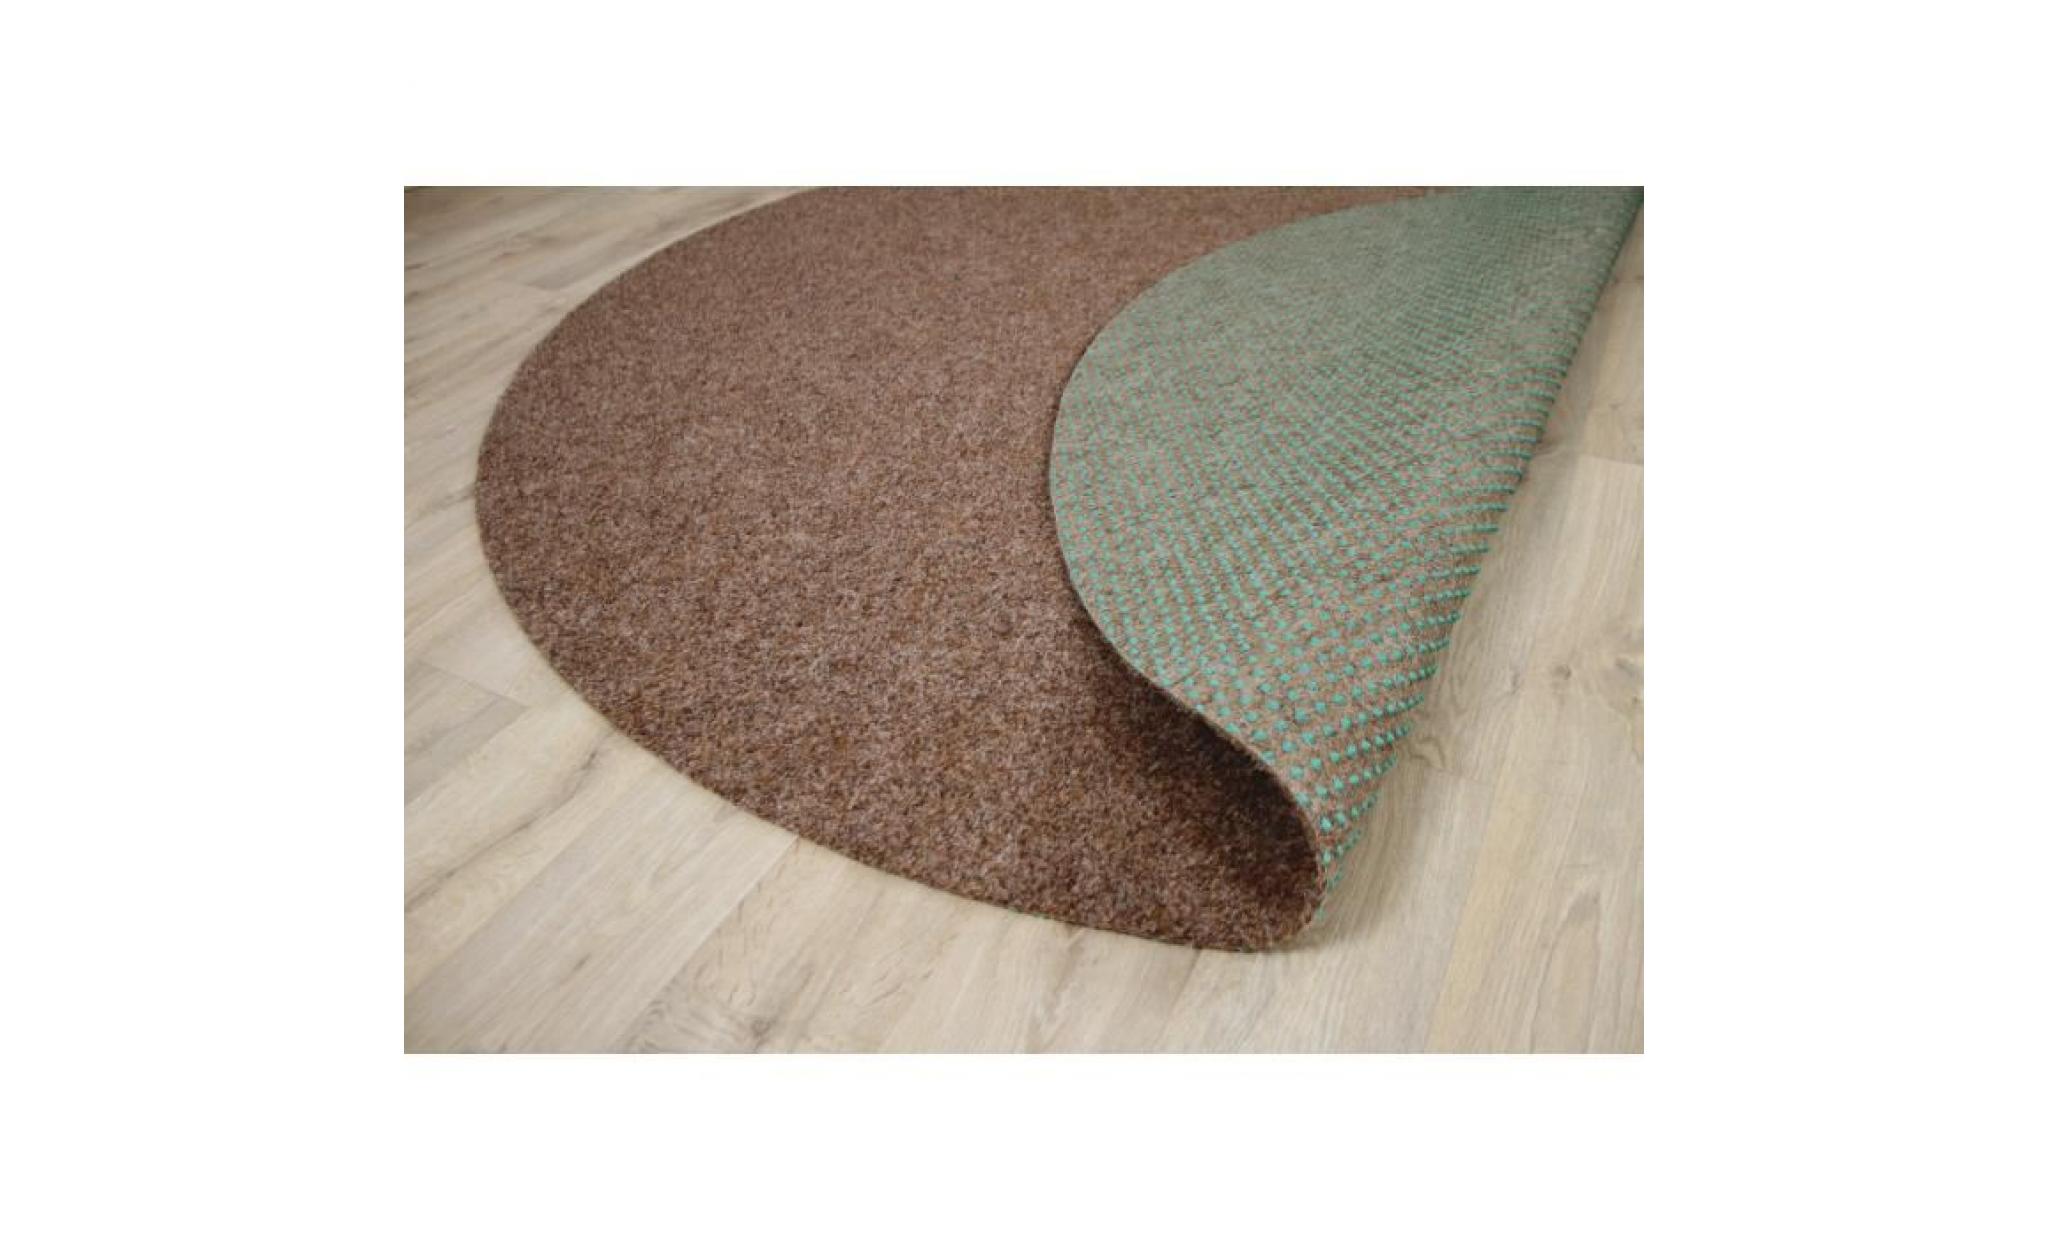 kingston   tapis type gazon artificiel rond – pour jardin, terrasse, balcon   vert  [100 cm rond] pas cher